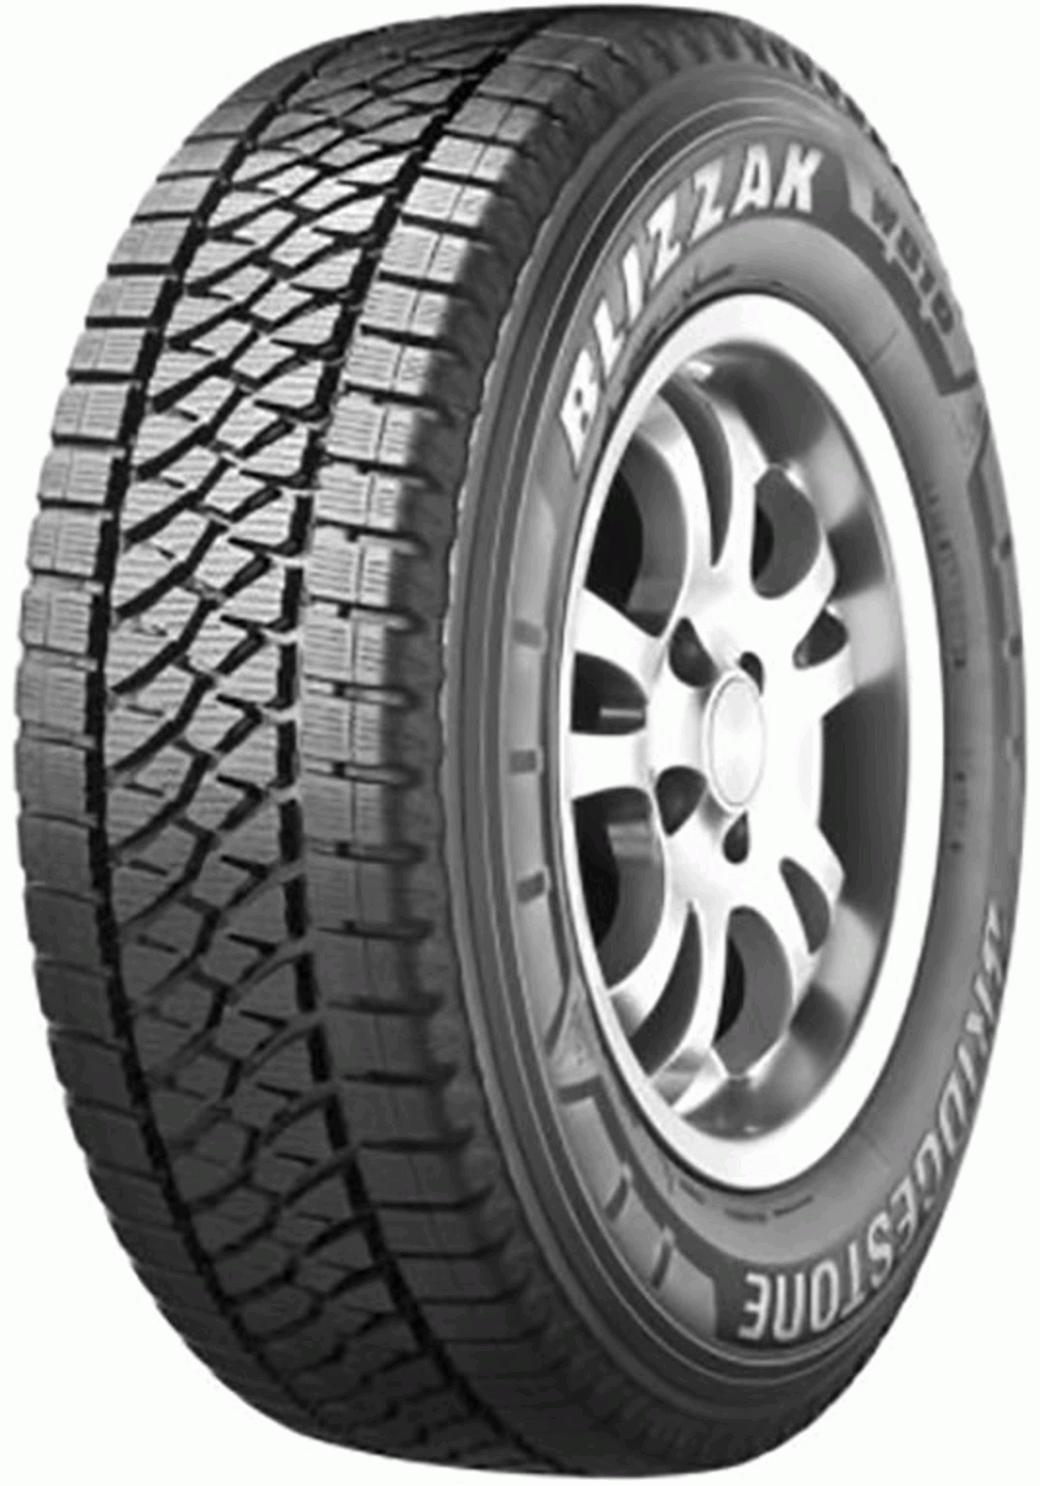 - and Tests Reviews Tire Bridgestone Blizzak W810